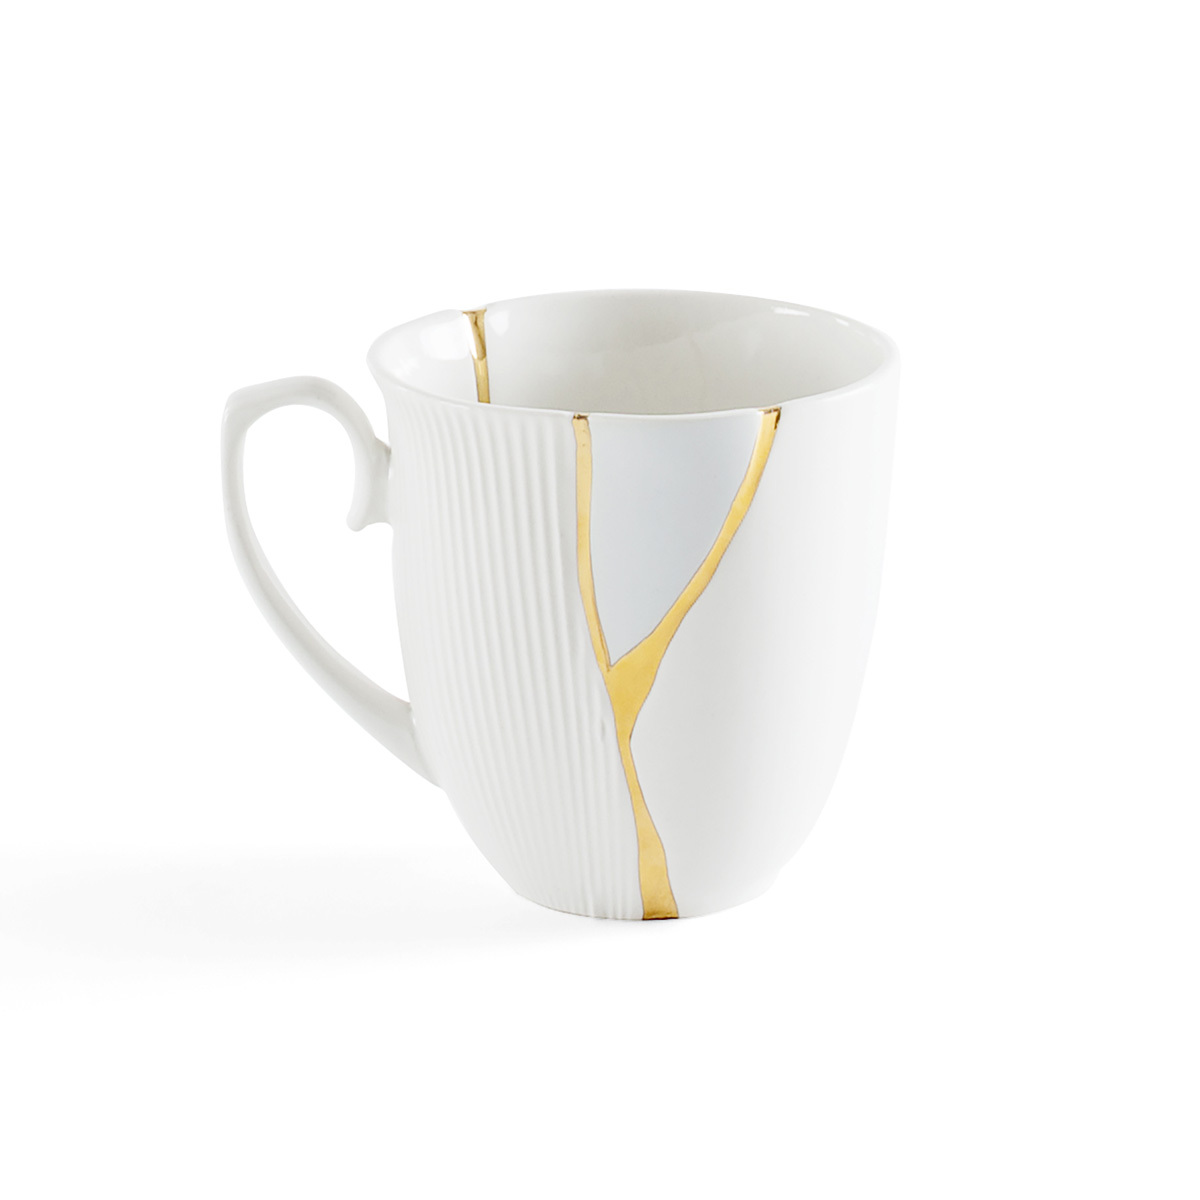 Seletti - KINTSUGI - Mug n°2 in porcellana cm 8,5